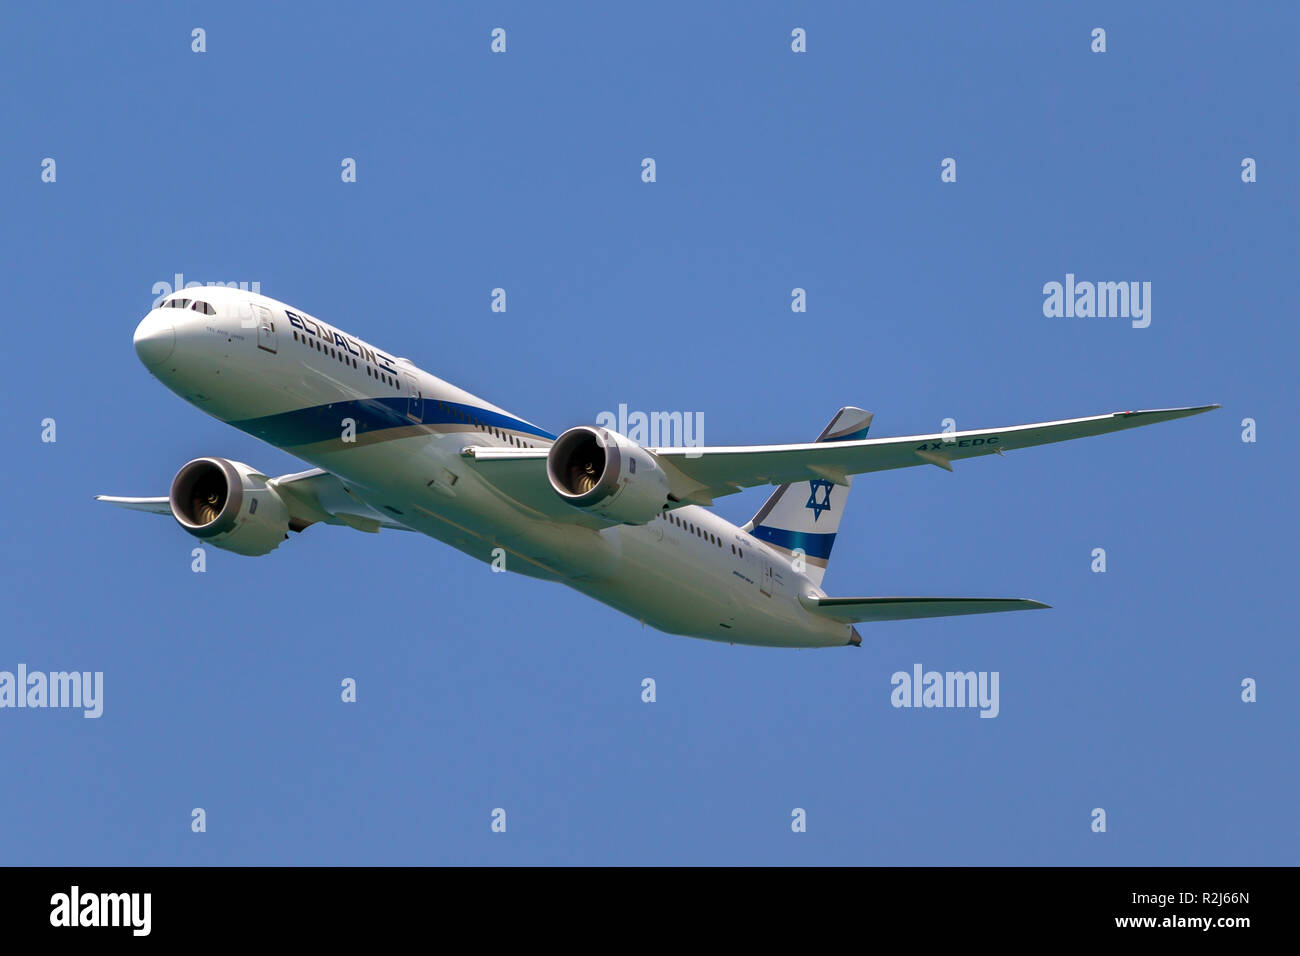 El Al Boeing 787-9 Dreamliner Photographed at Ben-Gurion Airport, Israel Stock Photo